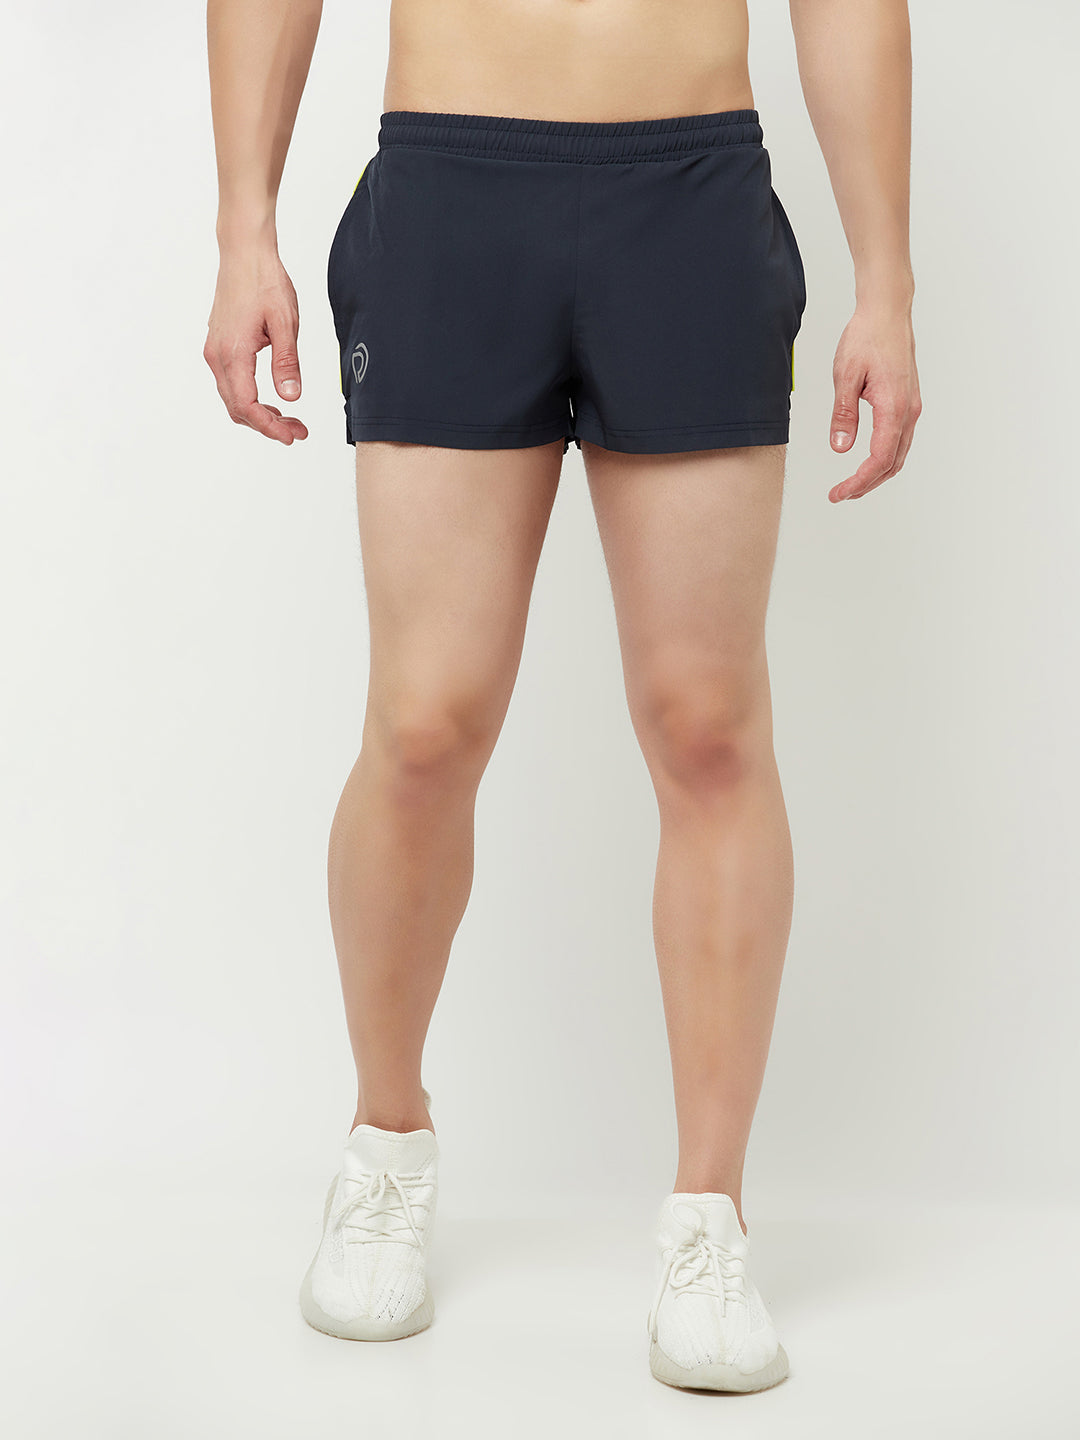 Pro 2" Shorts with Zipper Back Pocket